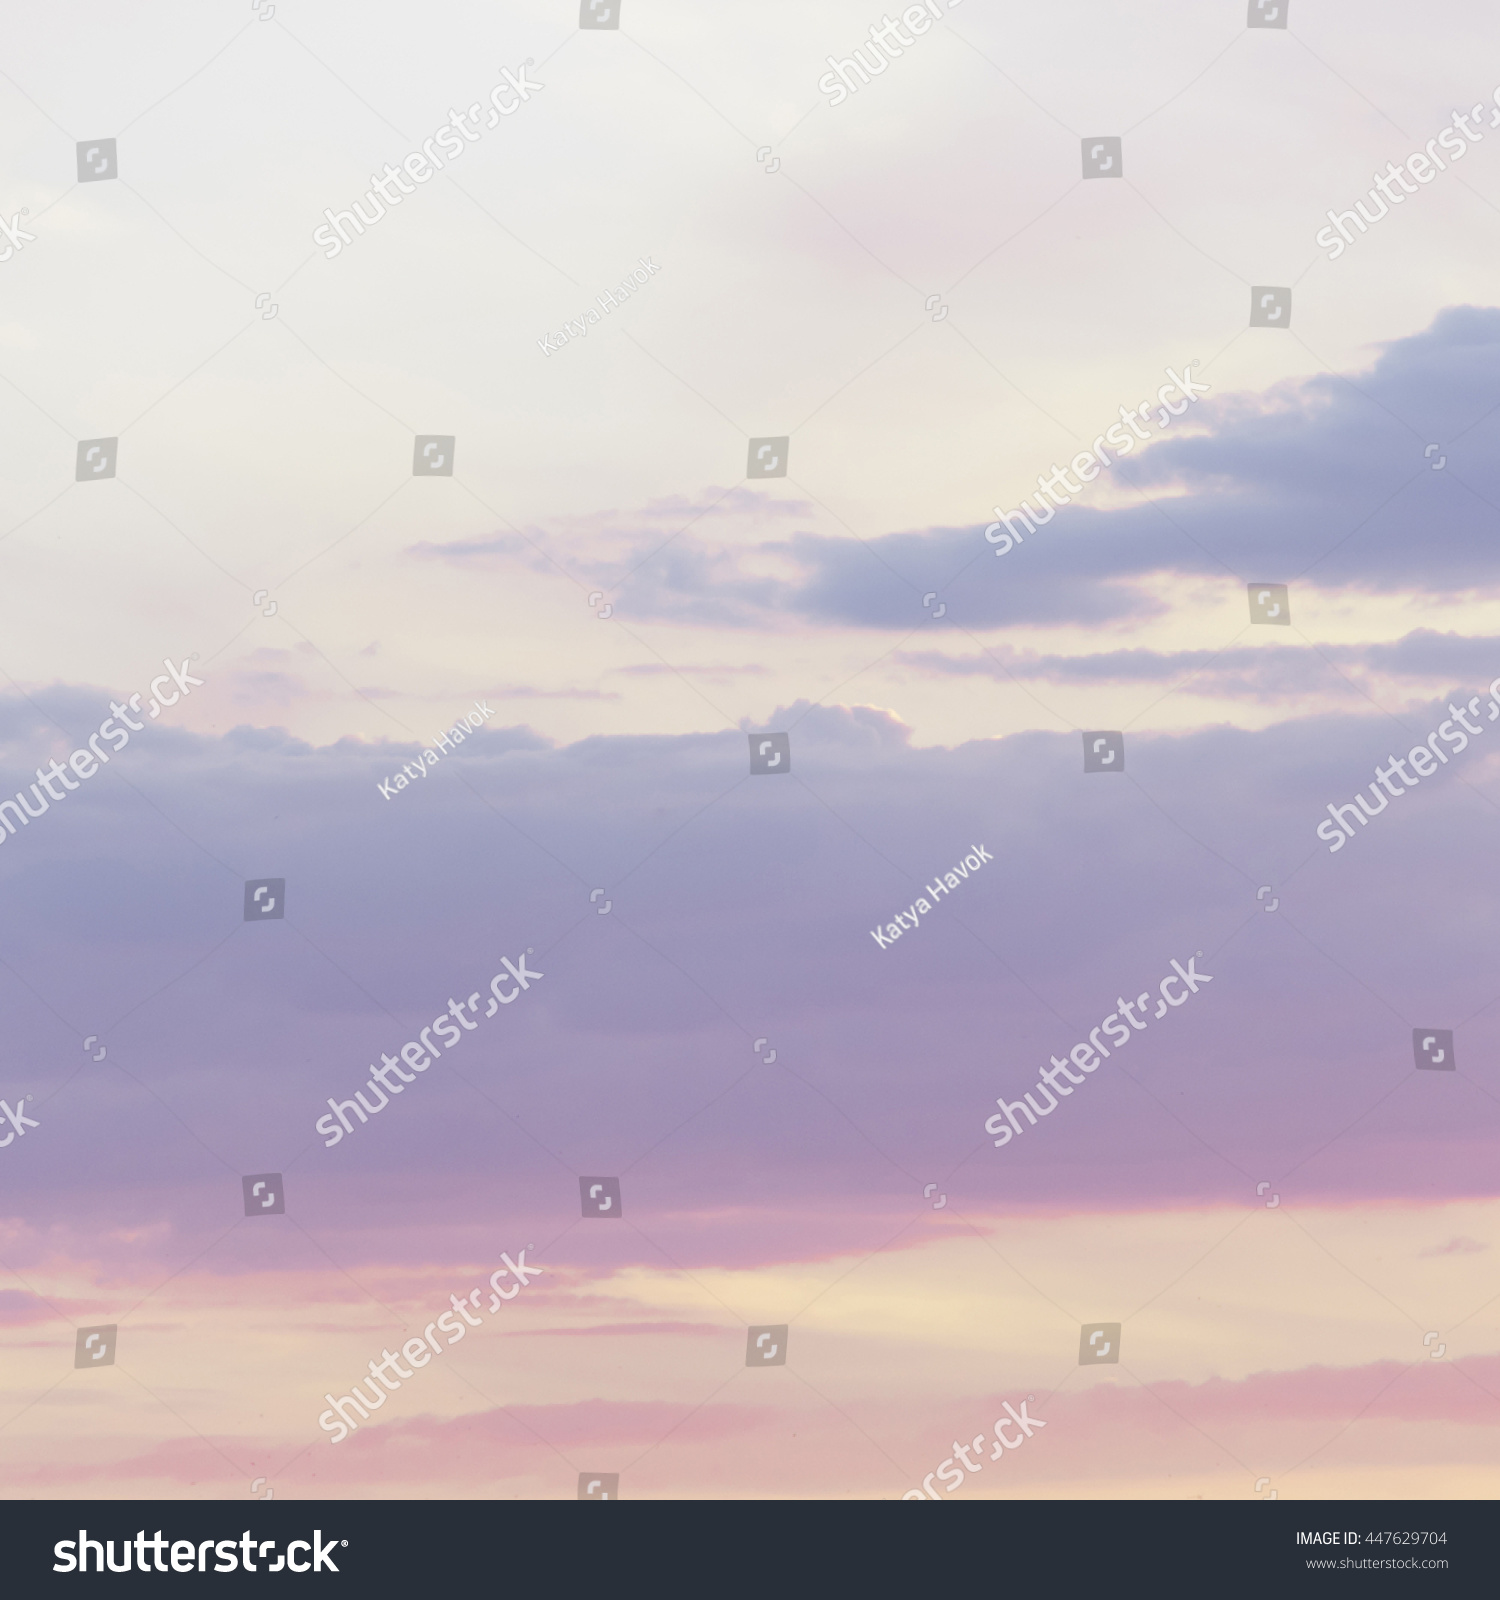 Serenity Rose Quartz Colors Sky Stock Photo 447629704 - Shutterstock